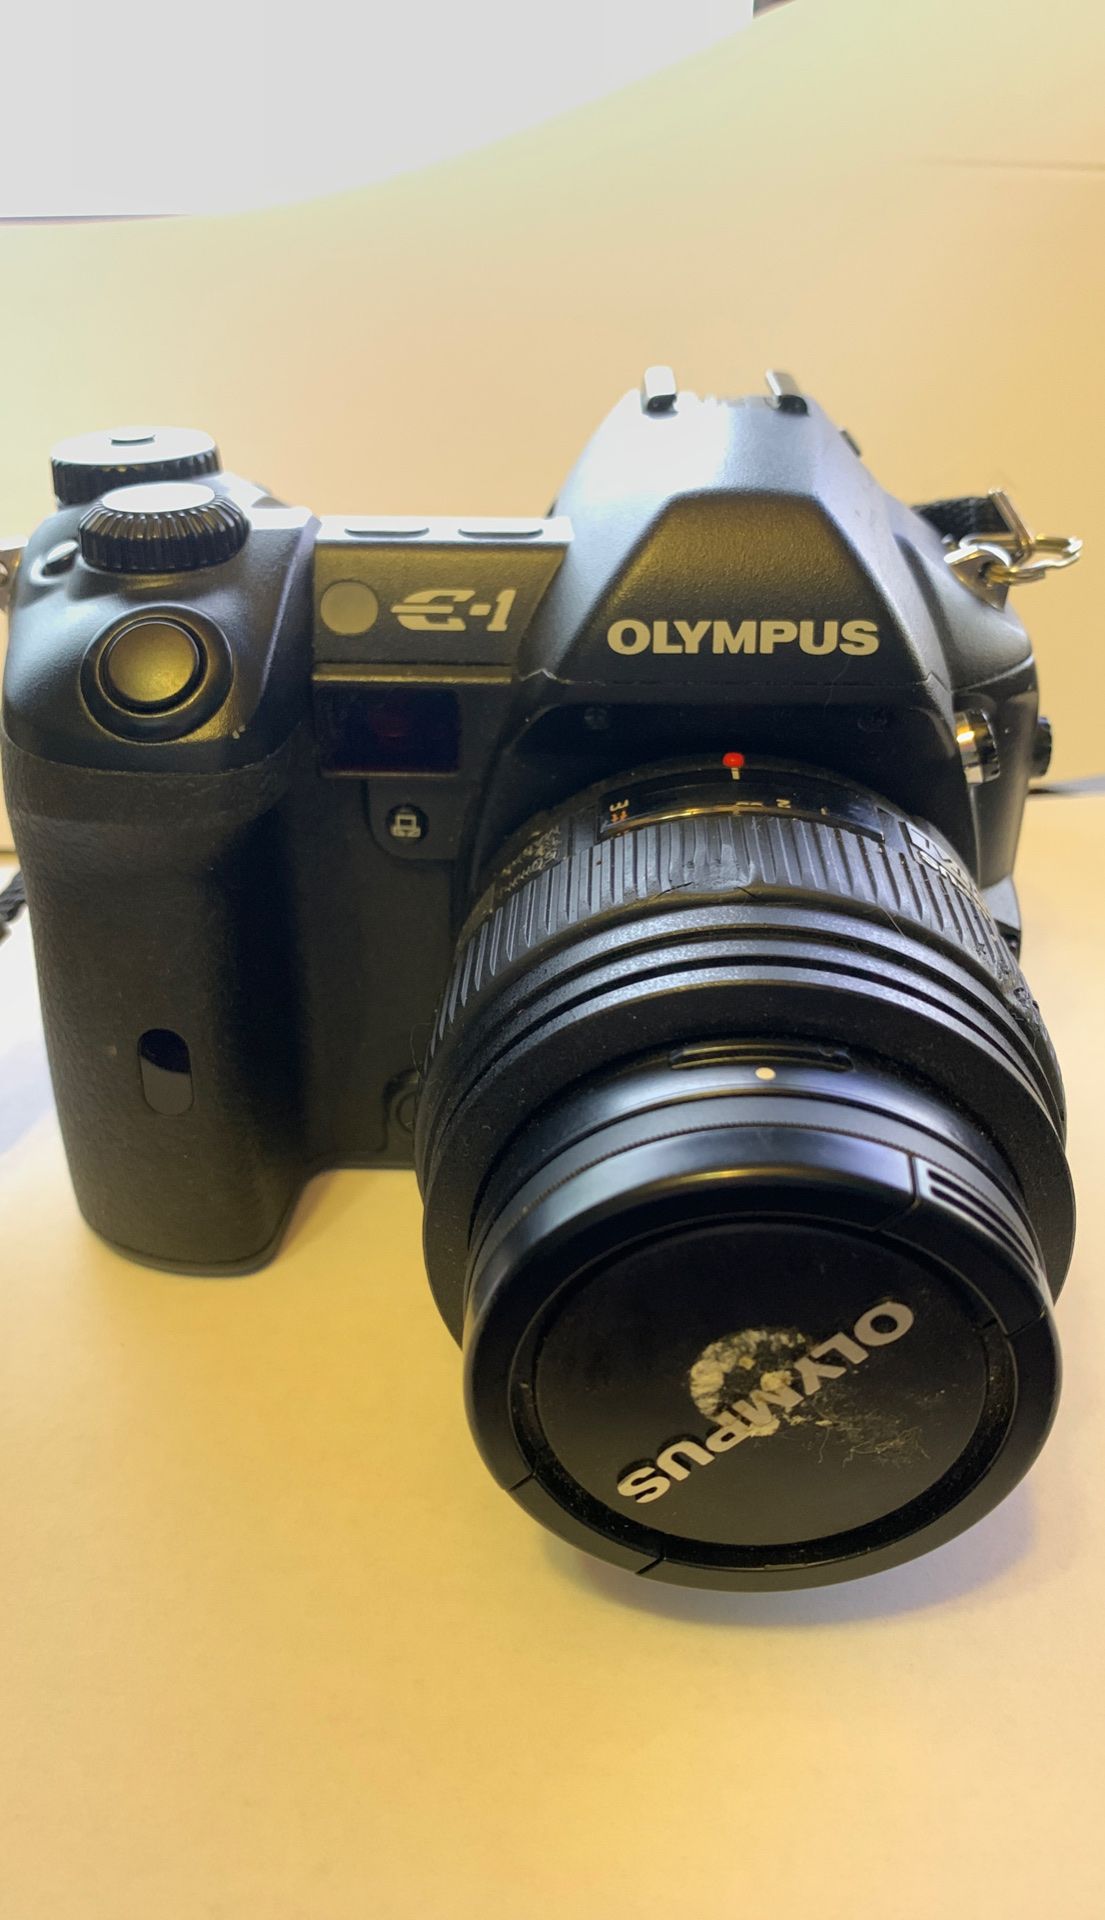 Olympus E-1 digital camera.